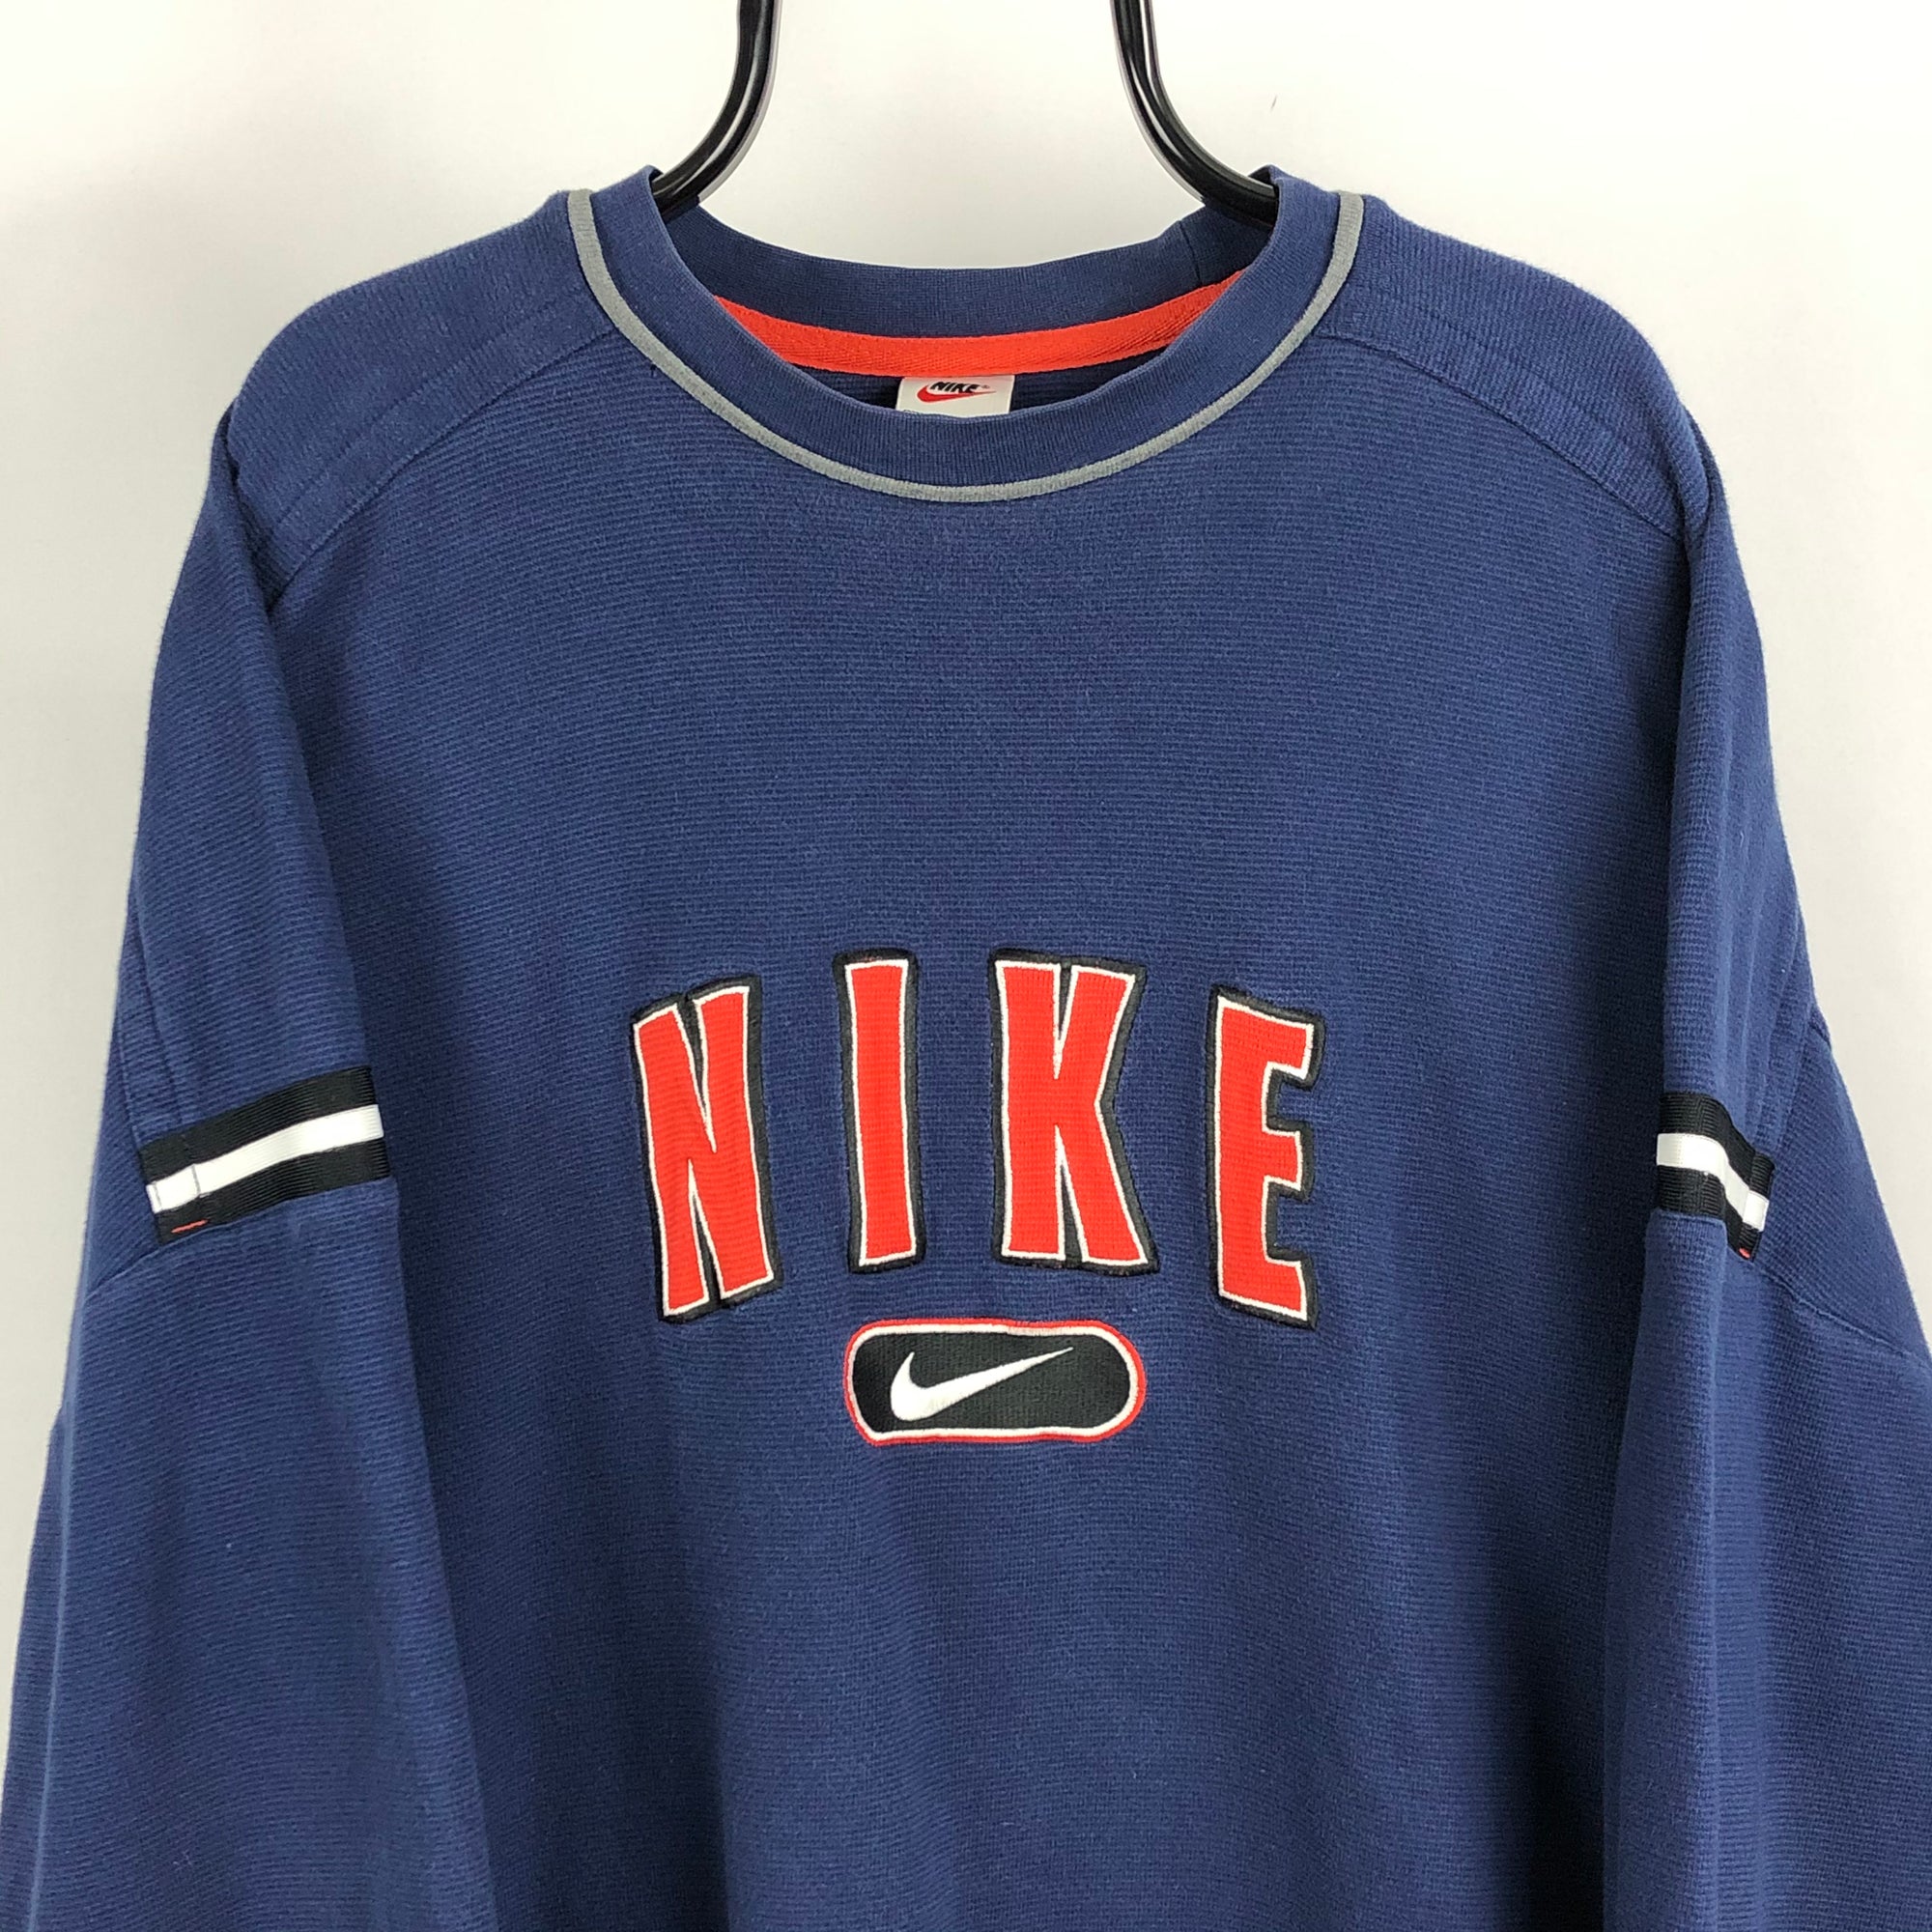 Vintage 90s Nike Spellout in Navy/Red - Men's XL/Women's XXL